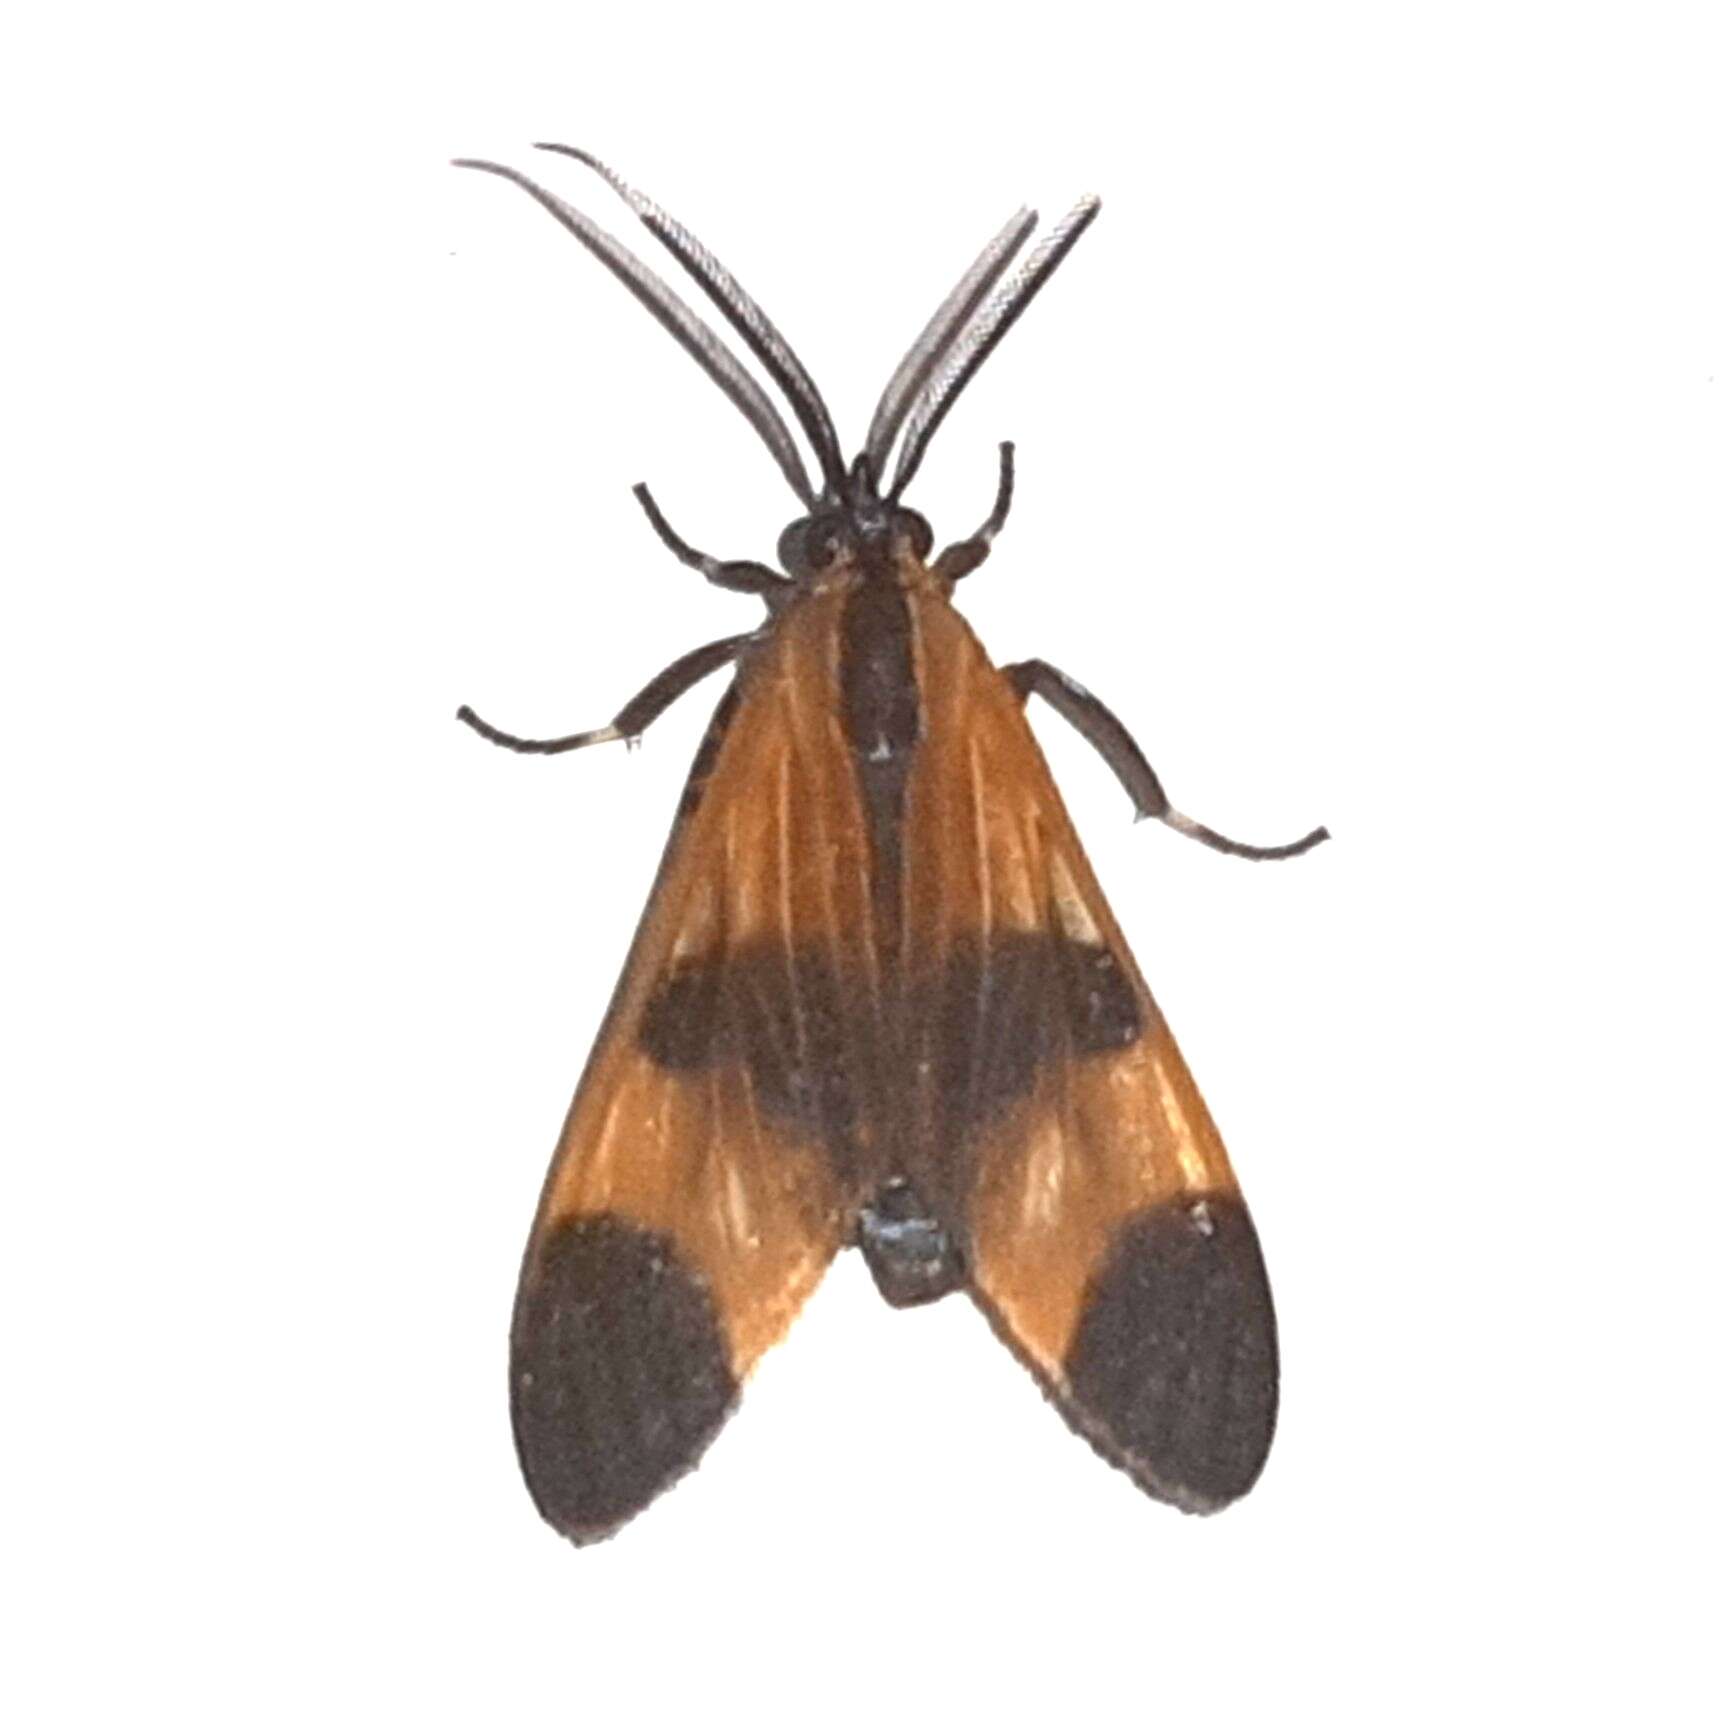 Image of Dycladia correbioides Felder 1869